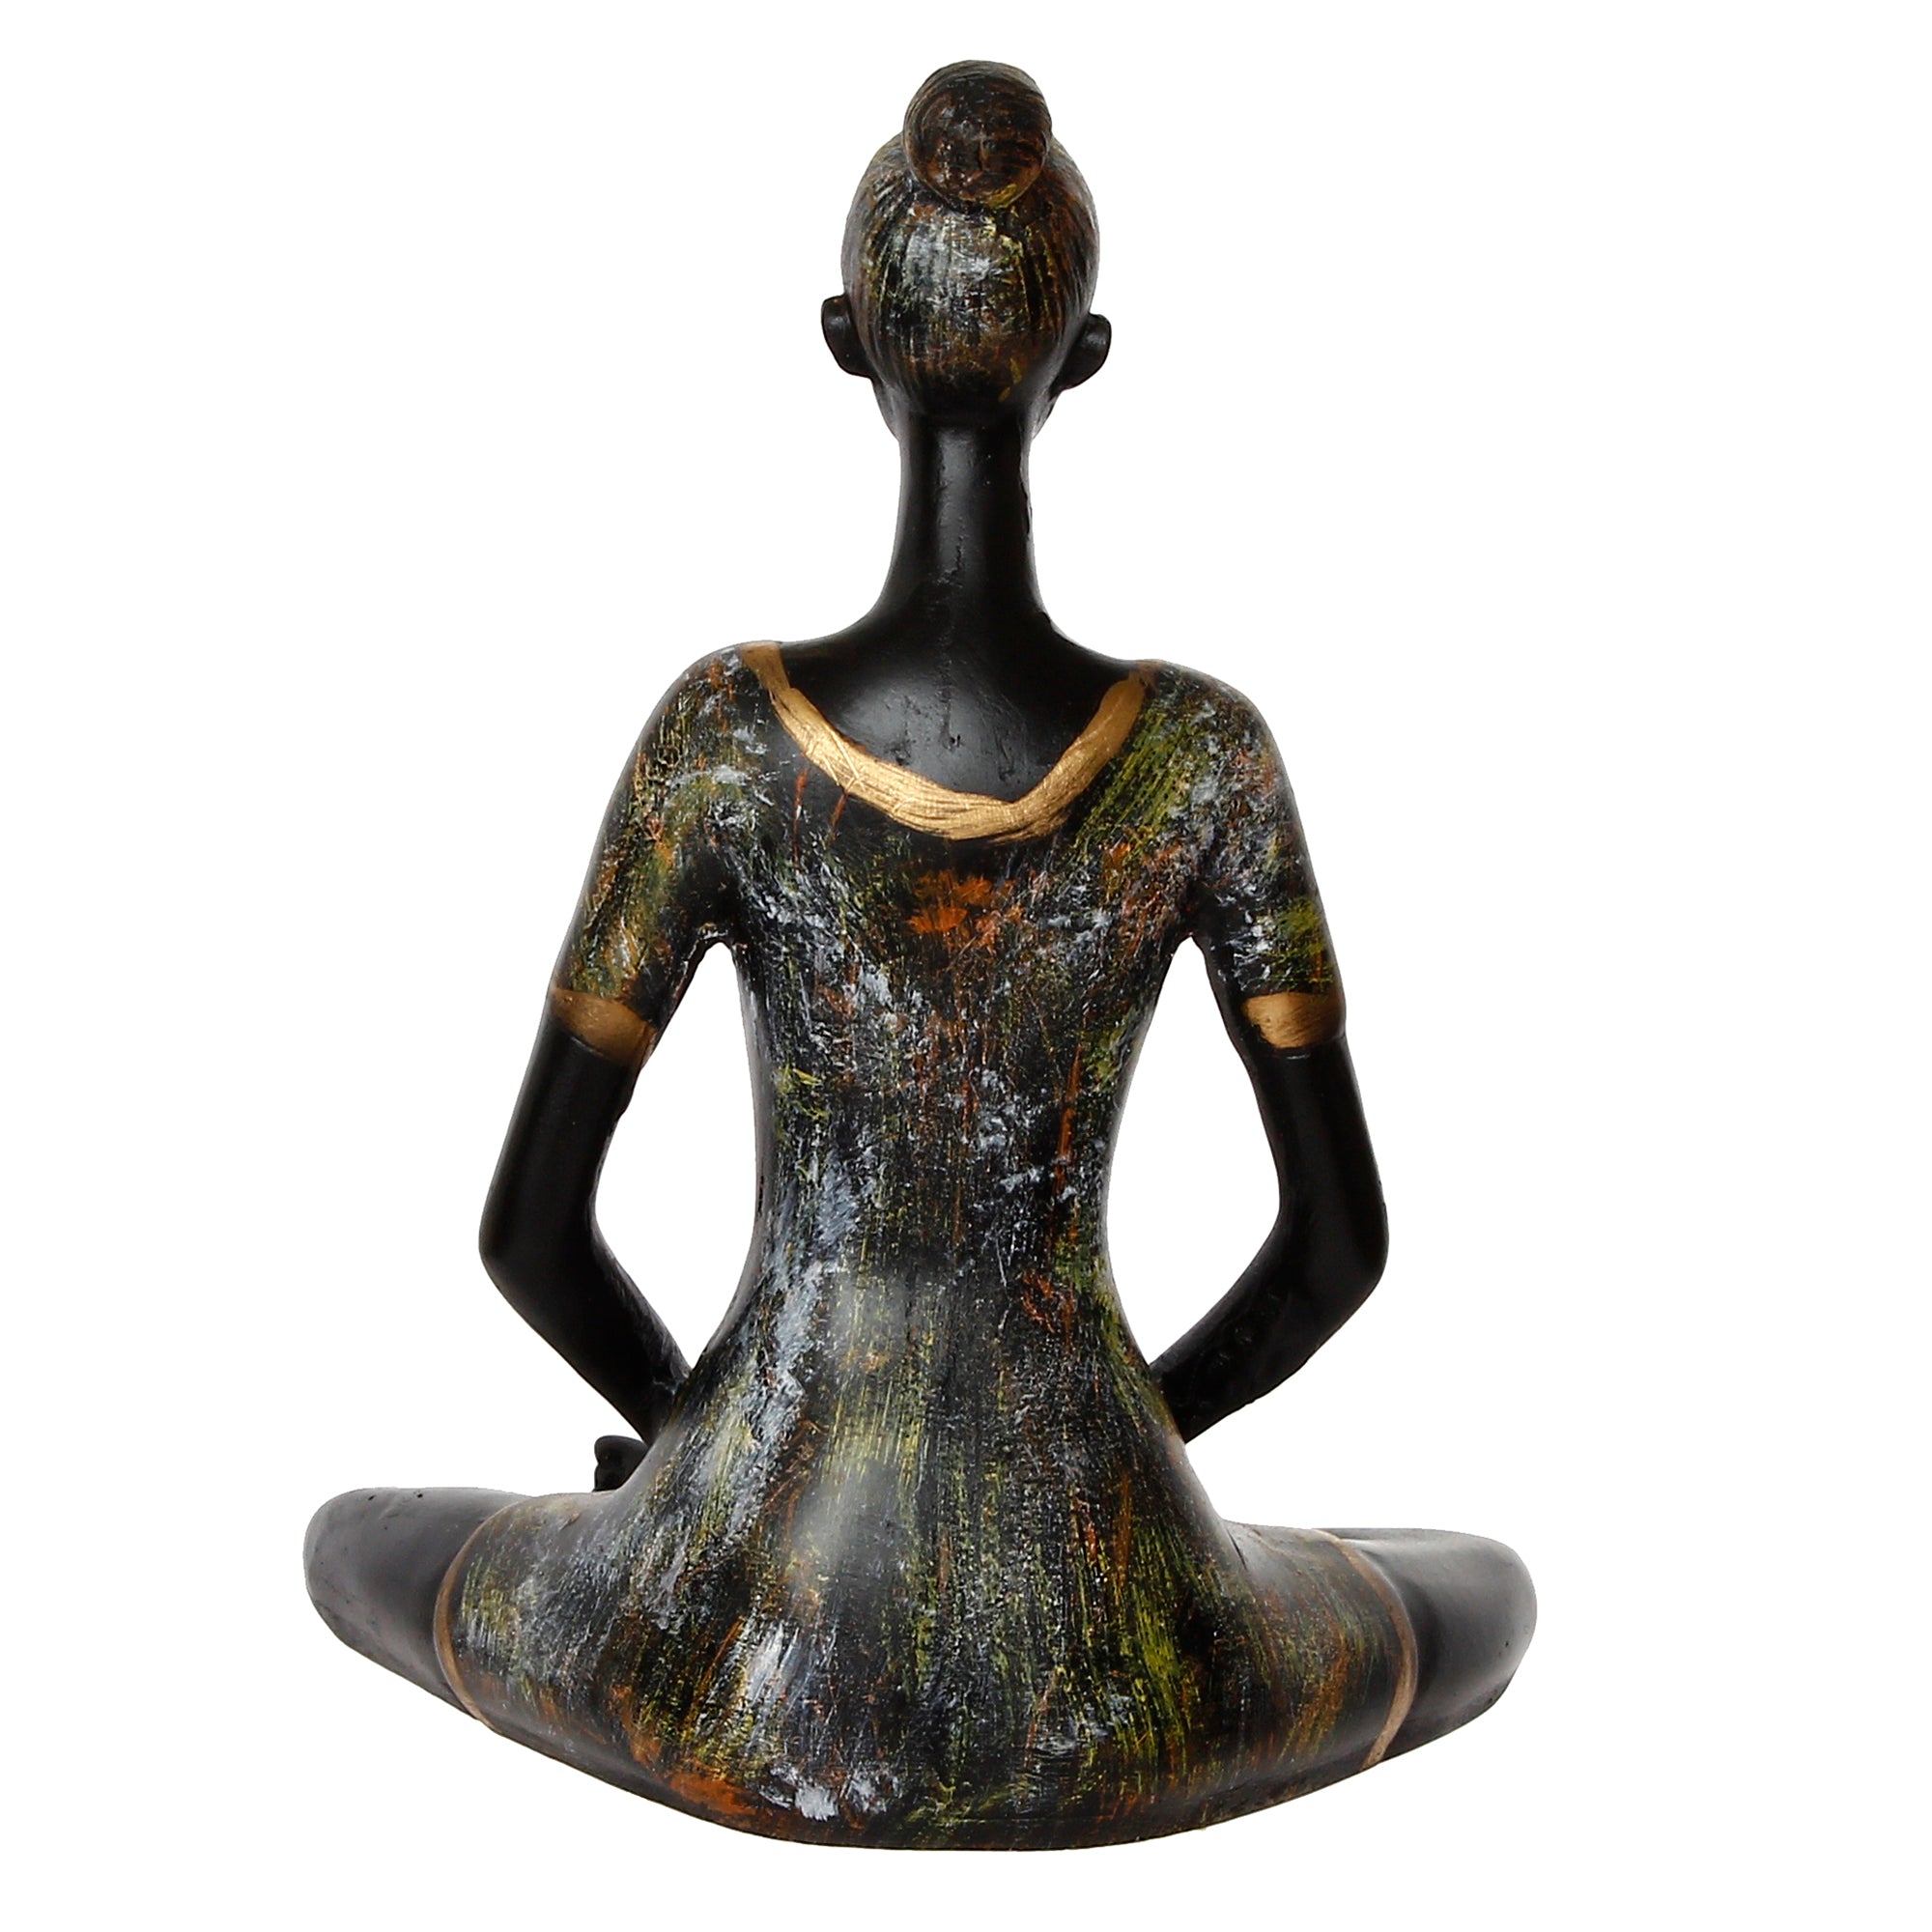 Grey and Black Polyresin Meditating lady in Padmasana - The Lotus Yoga Pose Decorative Showpiece 6